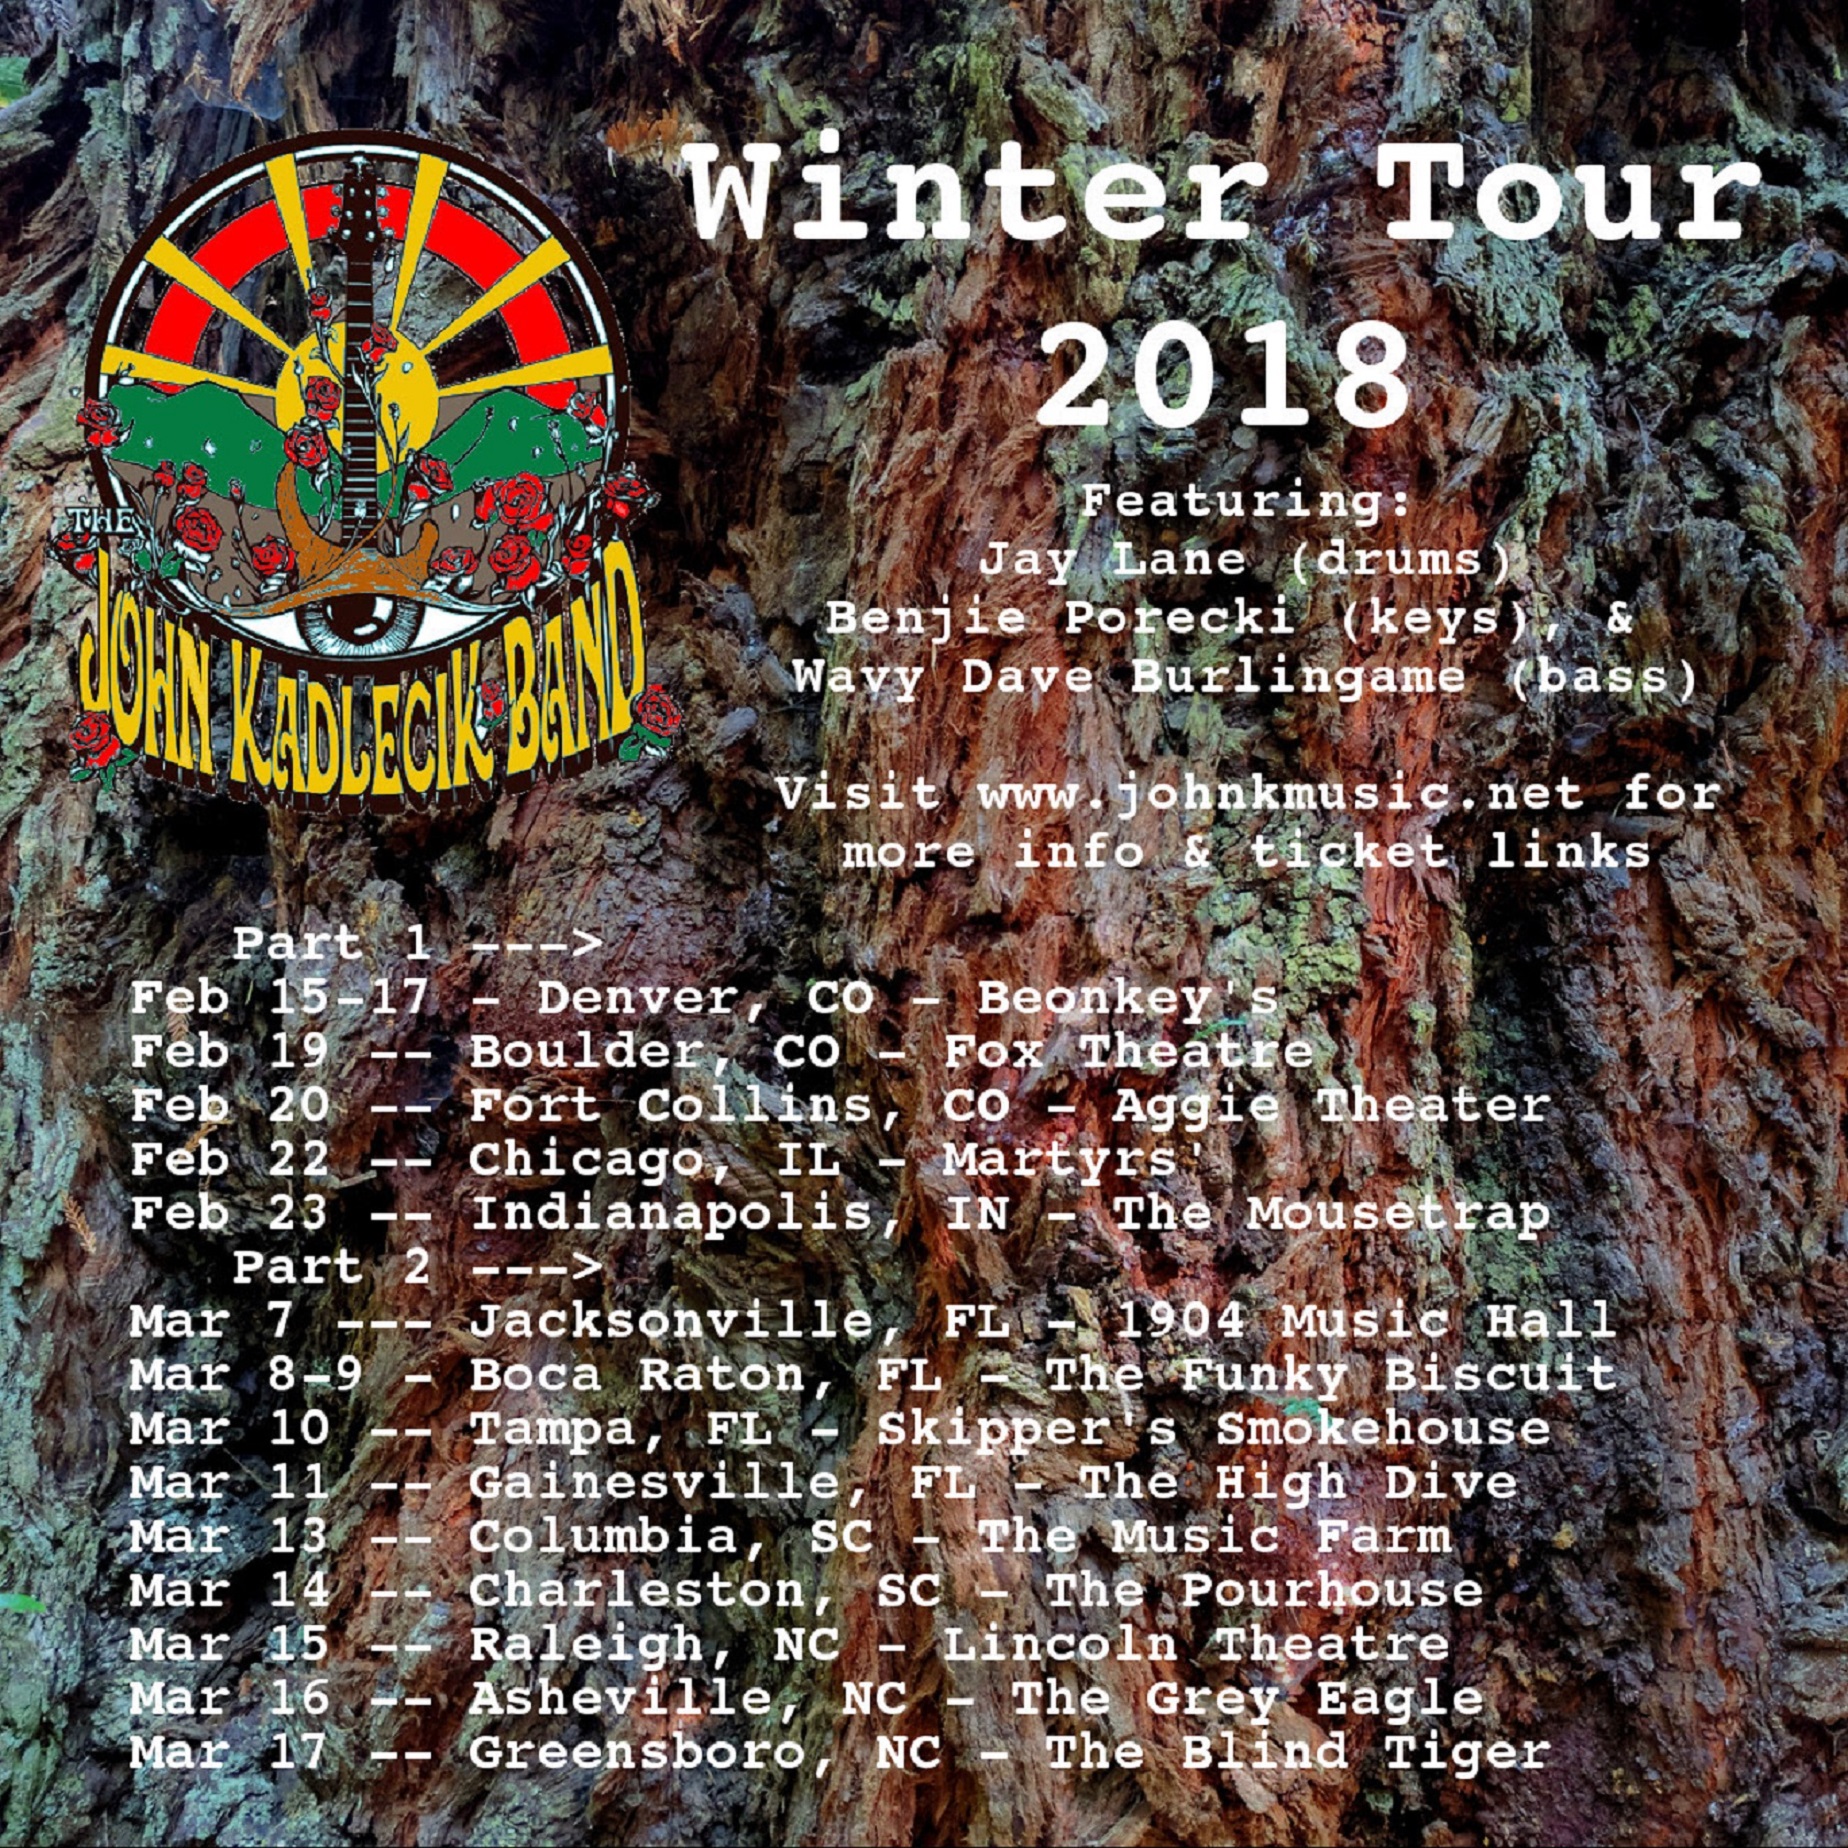 John Kadlecik Band Winter Tour 2018